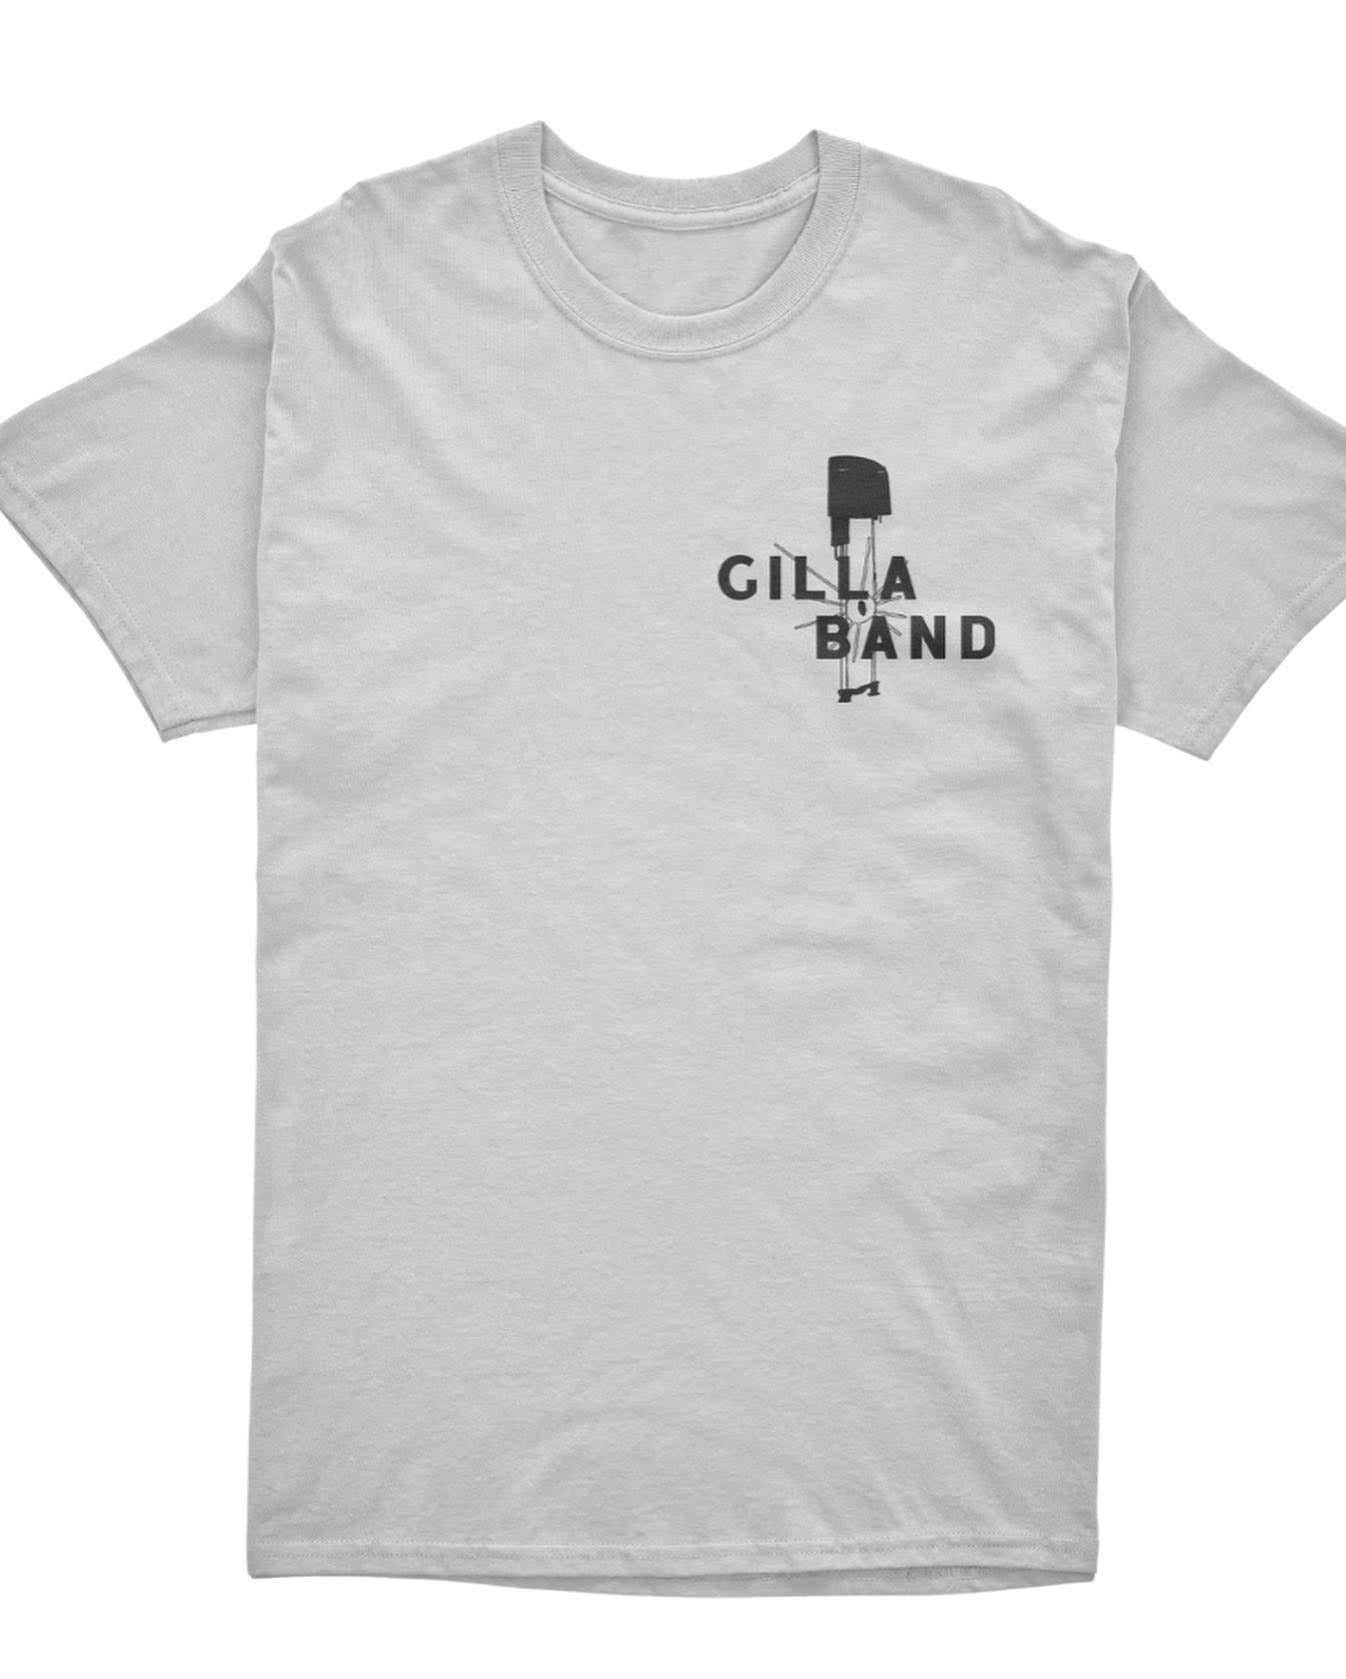 Gilla Band White T-Shirt